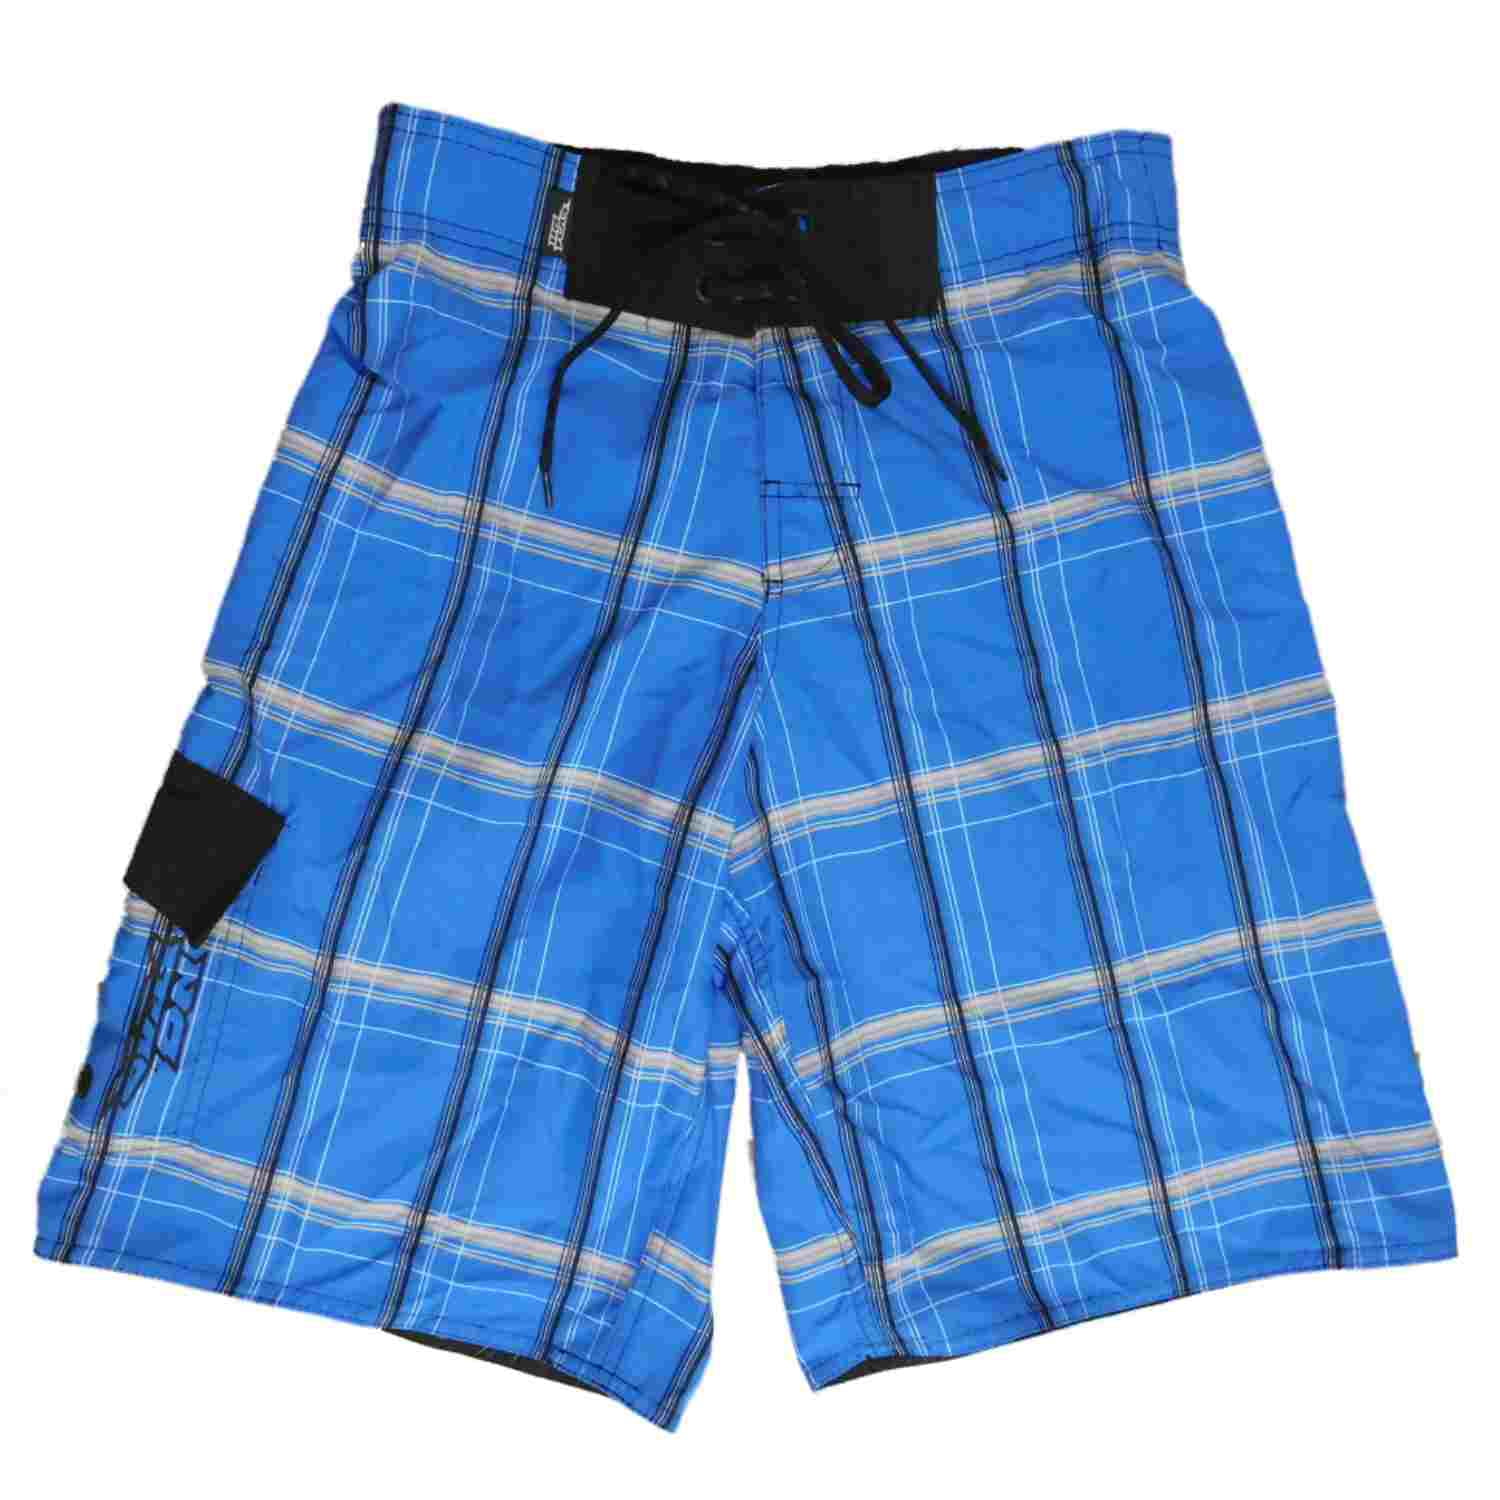 no-fear - mens blue plaid cargo swim trunks board shorts - Walmart.com ...